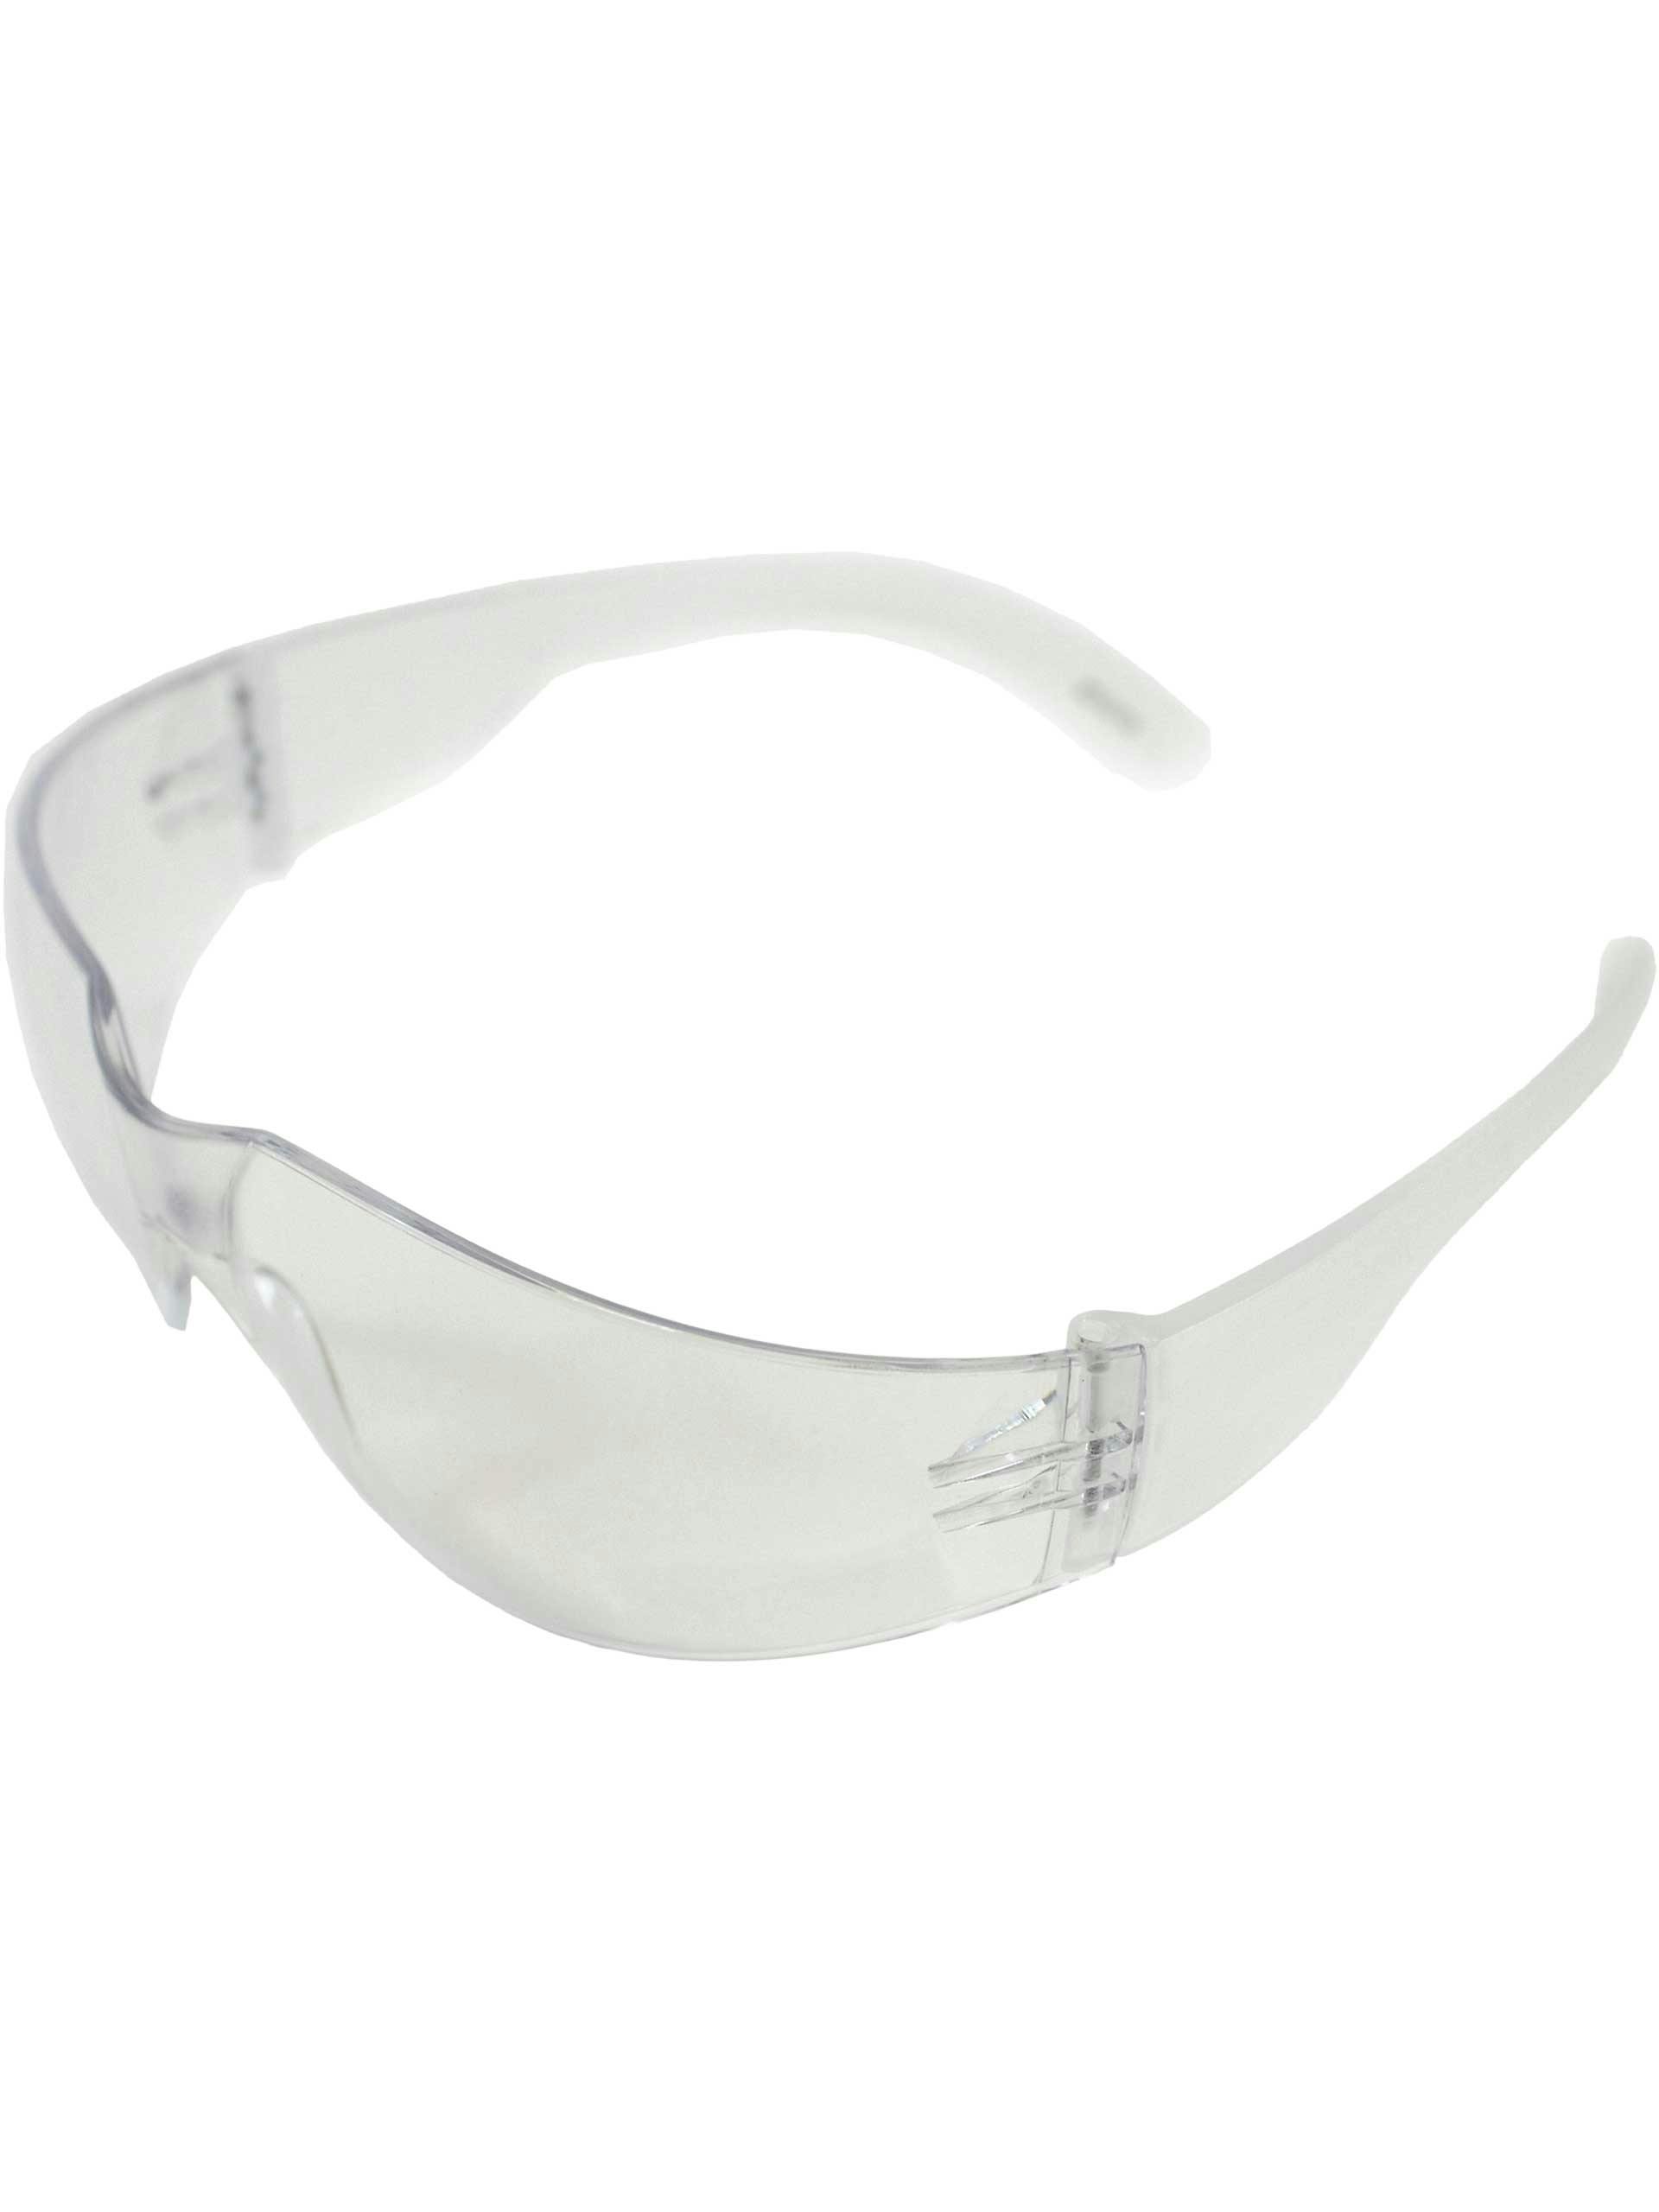 NUPROL - Protective Airsoft Safety Glasses | Patrol Base UK